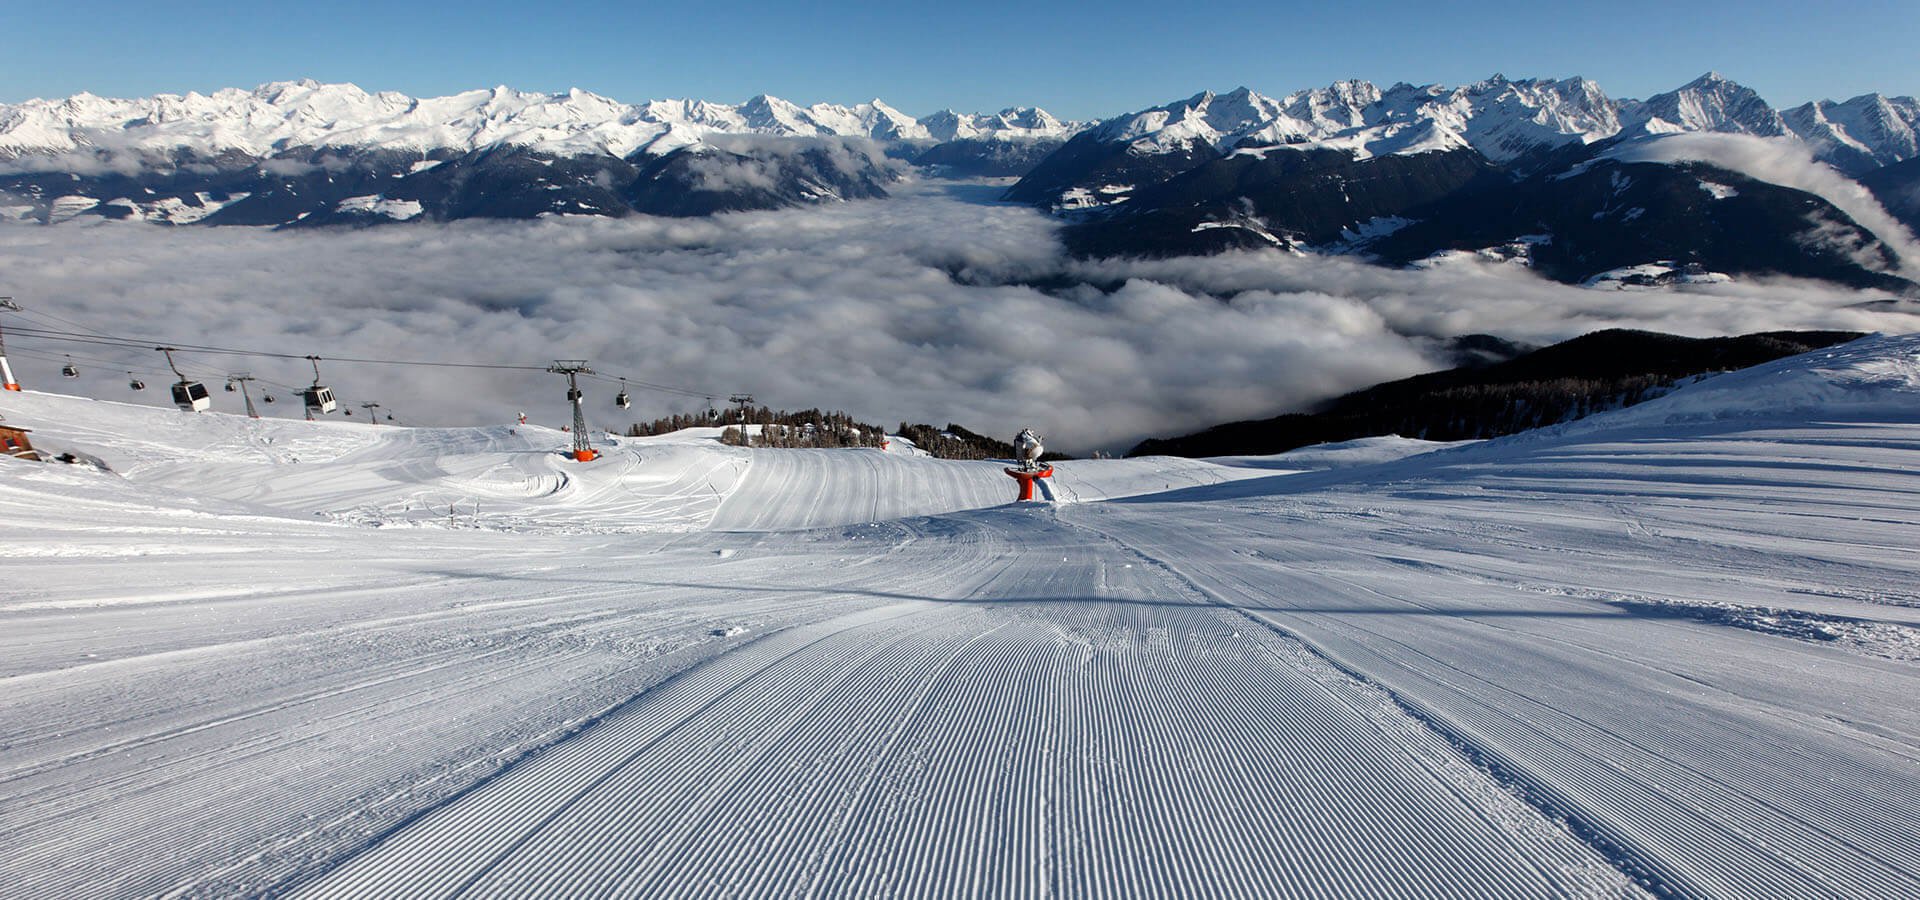 Langlaufen, Rodeln, Skitouren, Schneeschuhwandern in Südtirol 